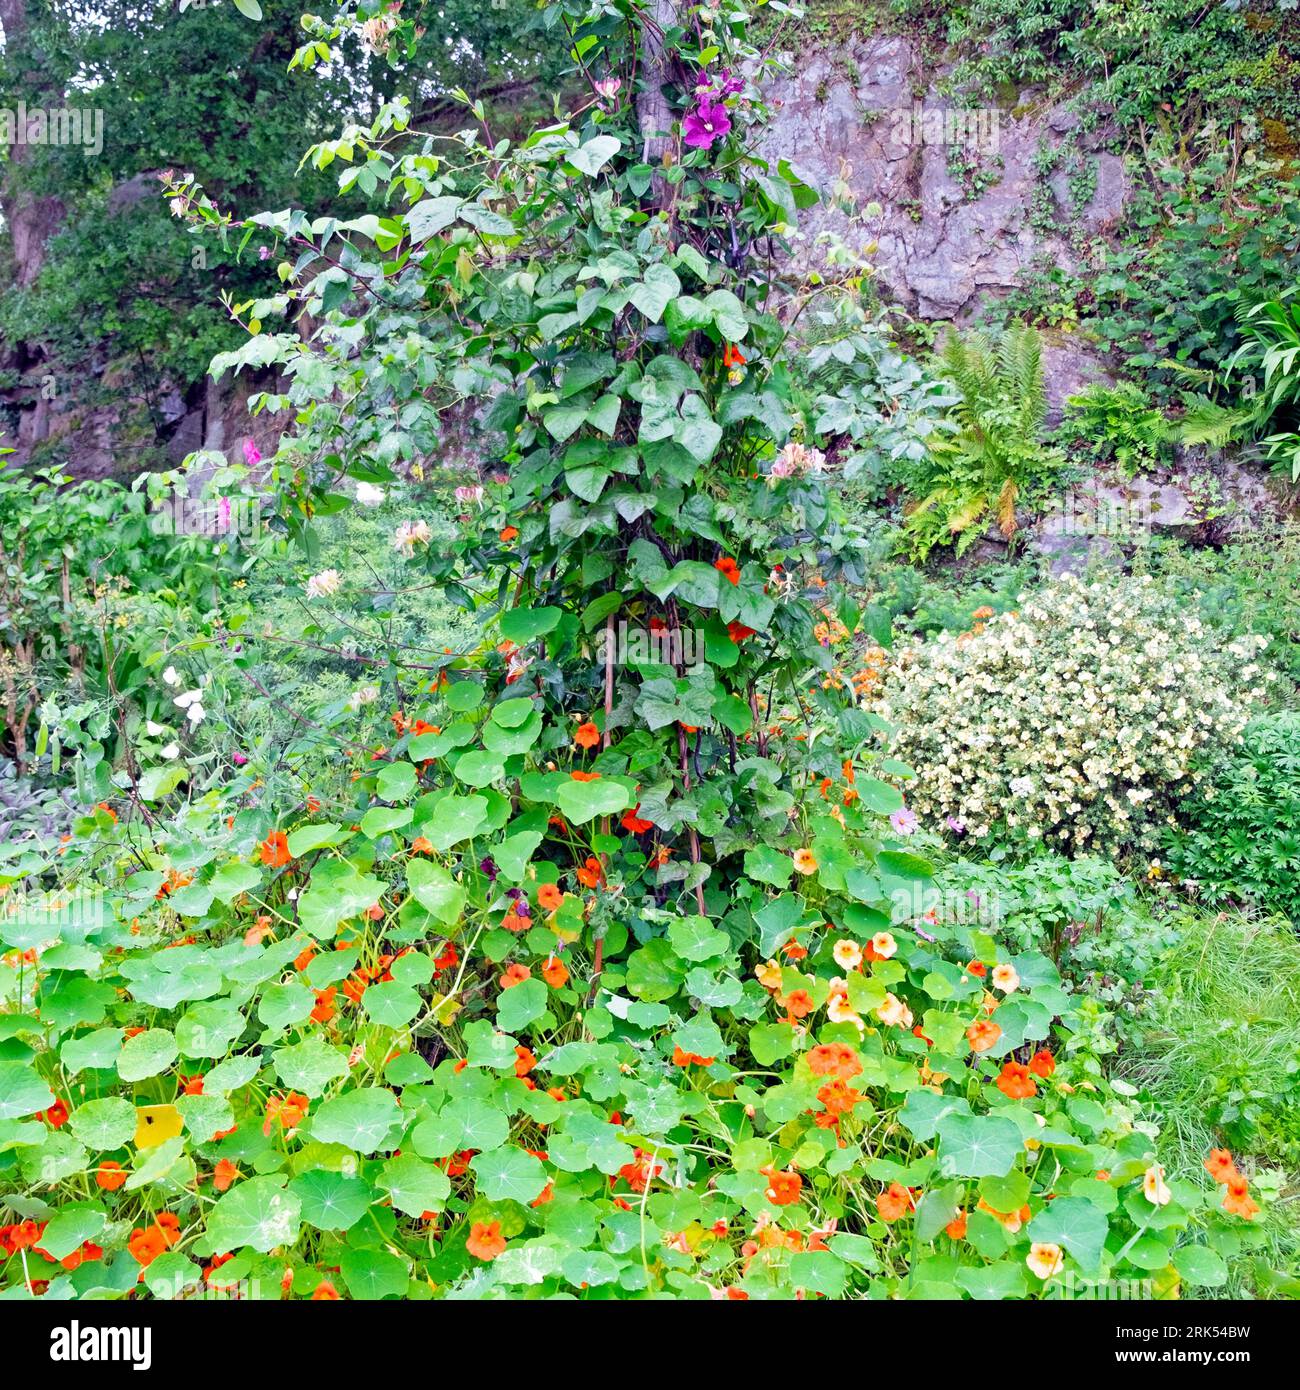 Various plants nasturtiums clematis honeysuckle purple runner beans growing up pole overgrown August garden summer 2023 Wales UK Britain KATHY DEWITT Stock Photo